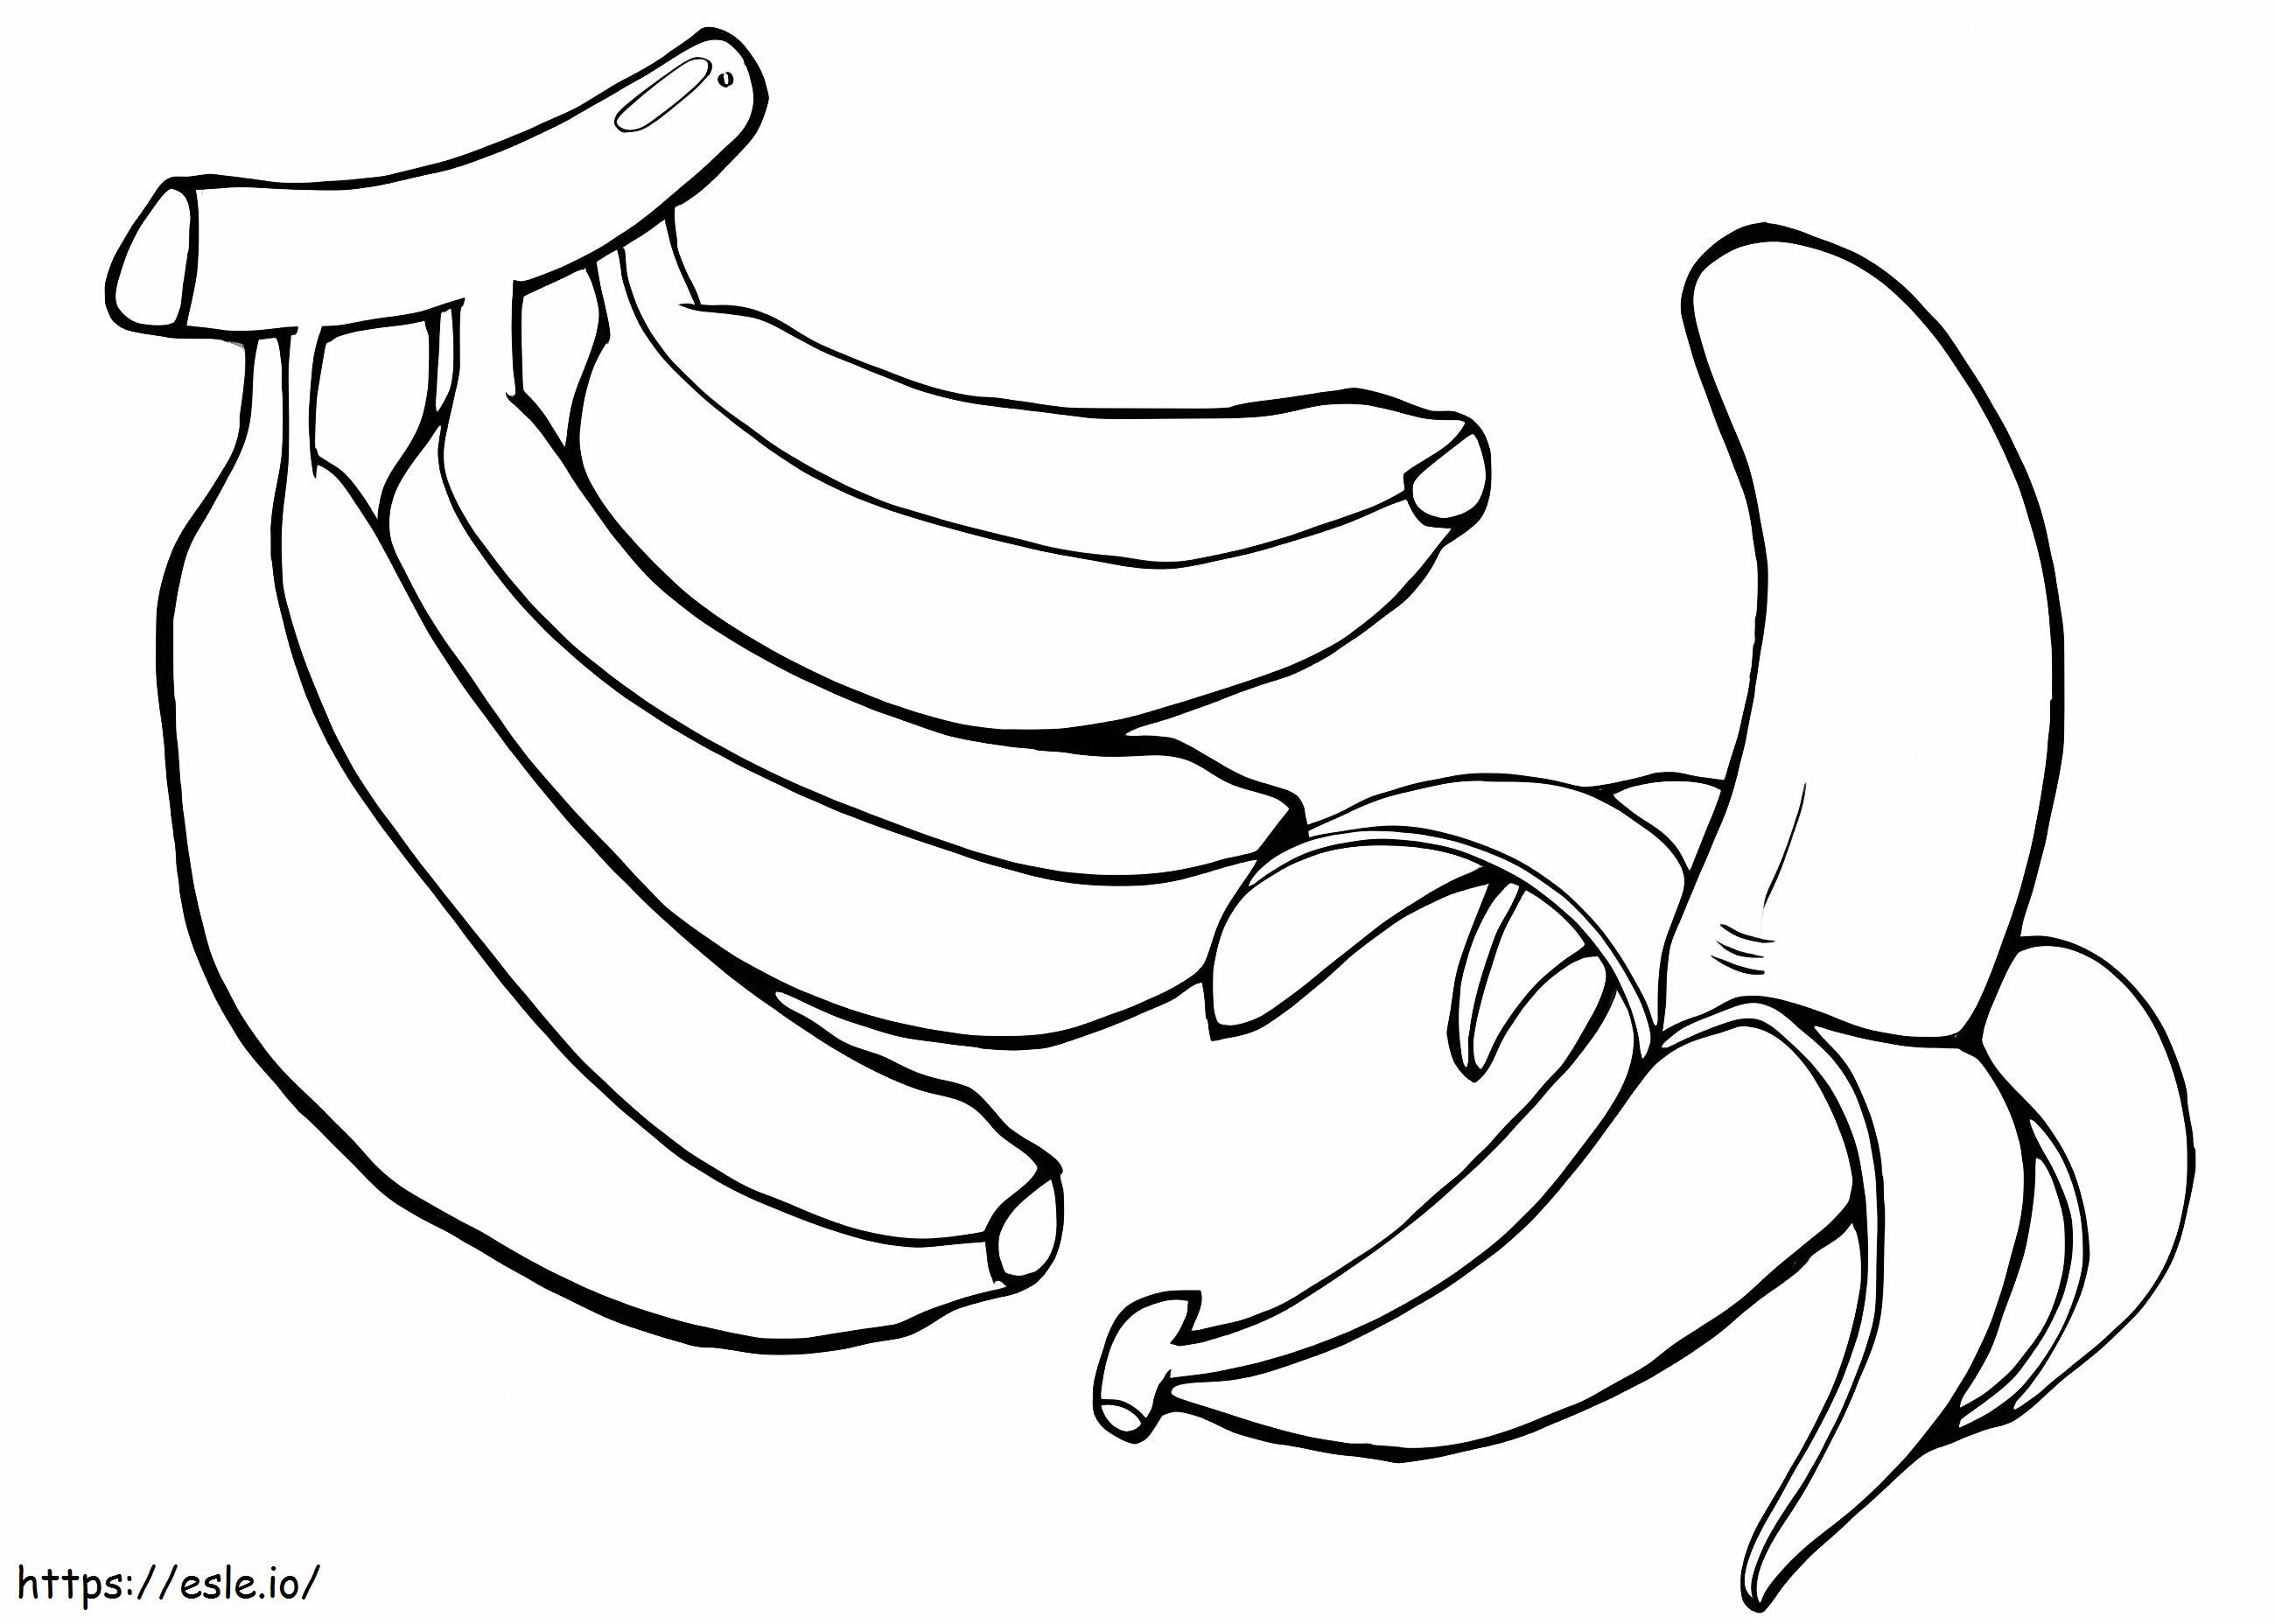 Bunch Of Bananas And A Peeled Banana coloring page